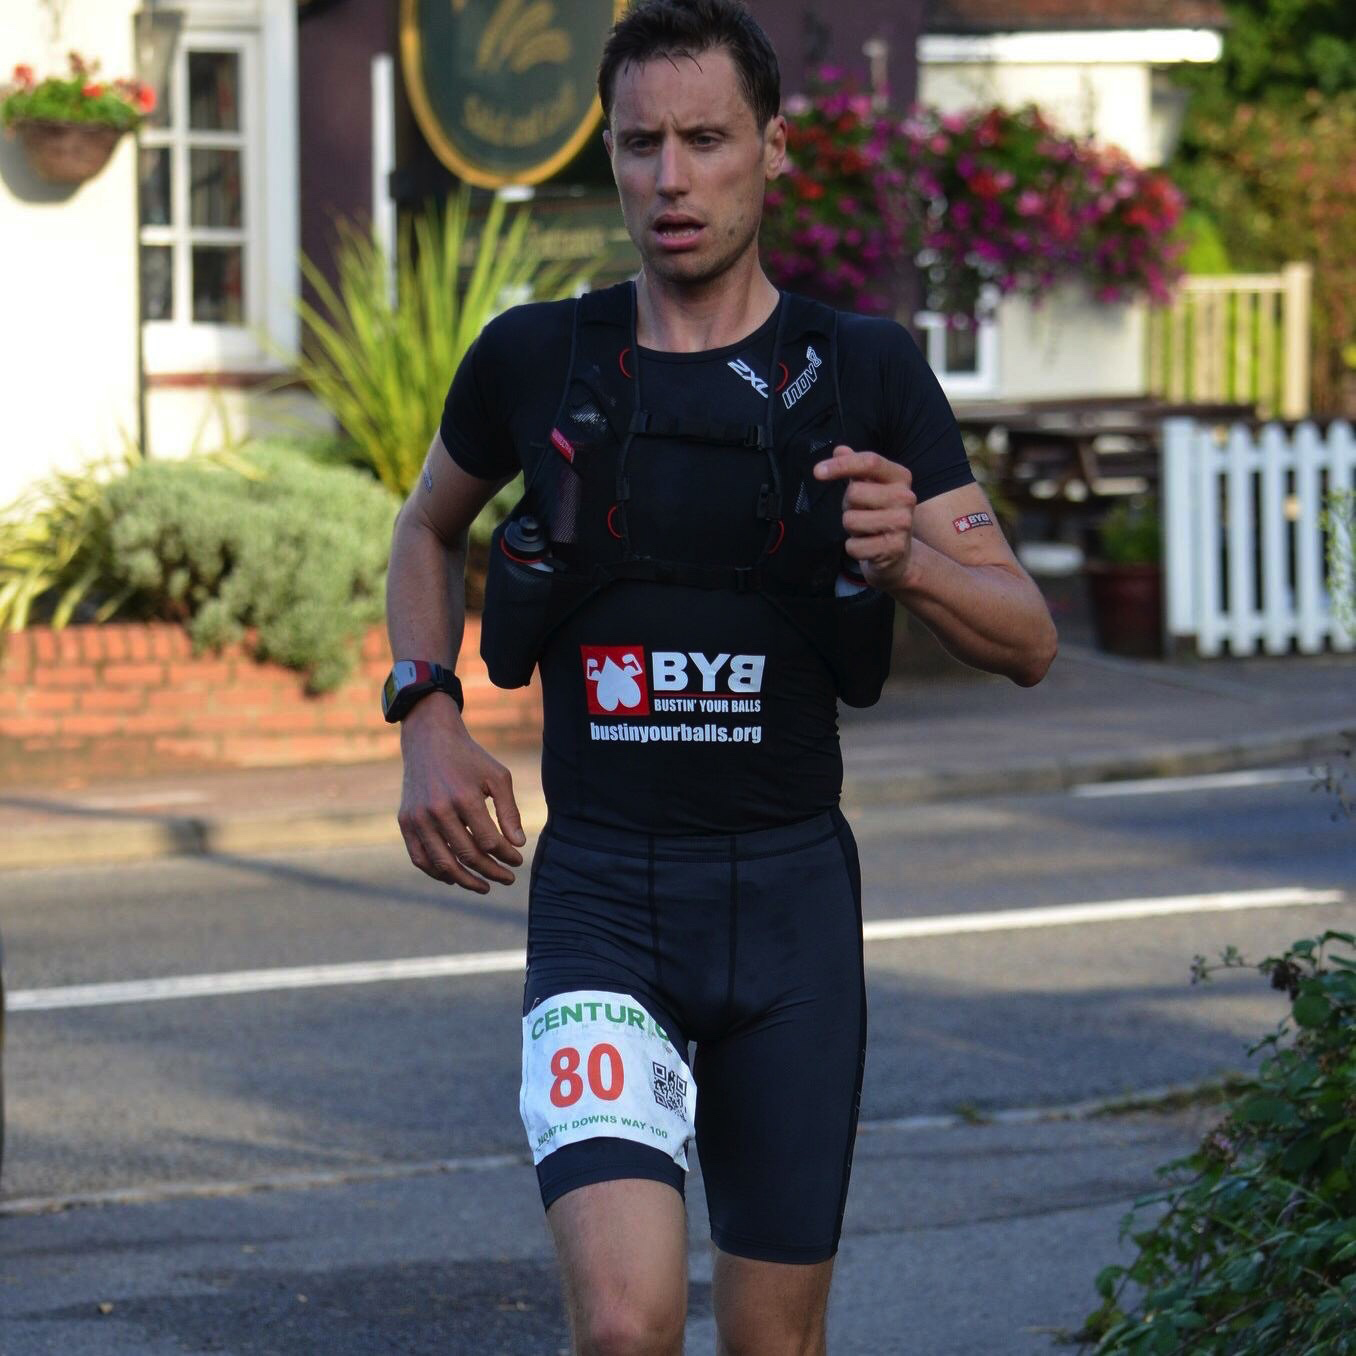 Tom Garrod BYB running in action shot - please credit photographer Stuart March